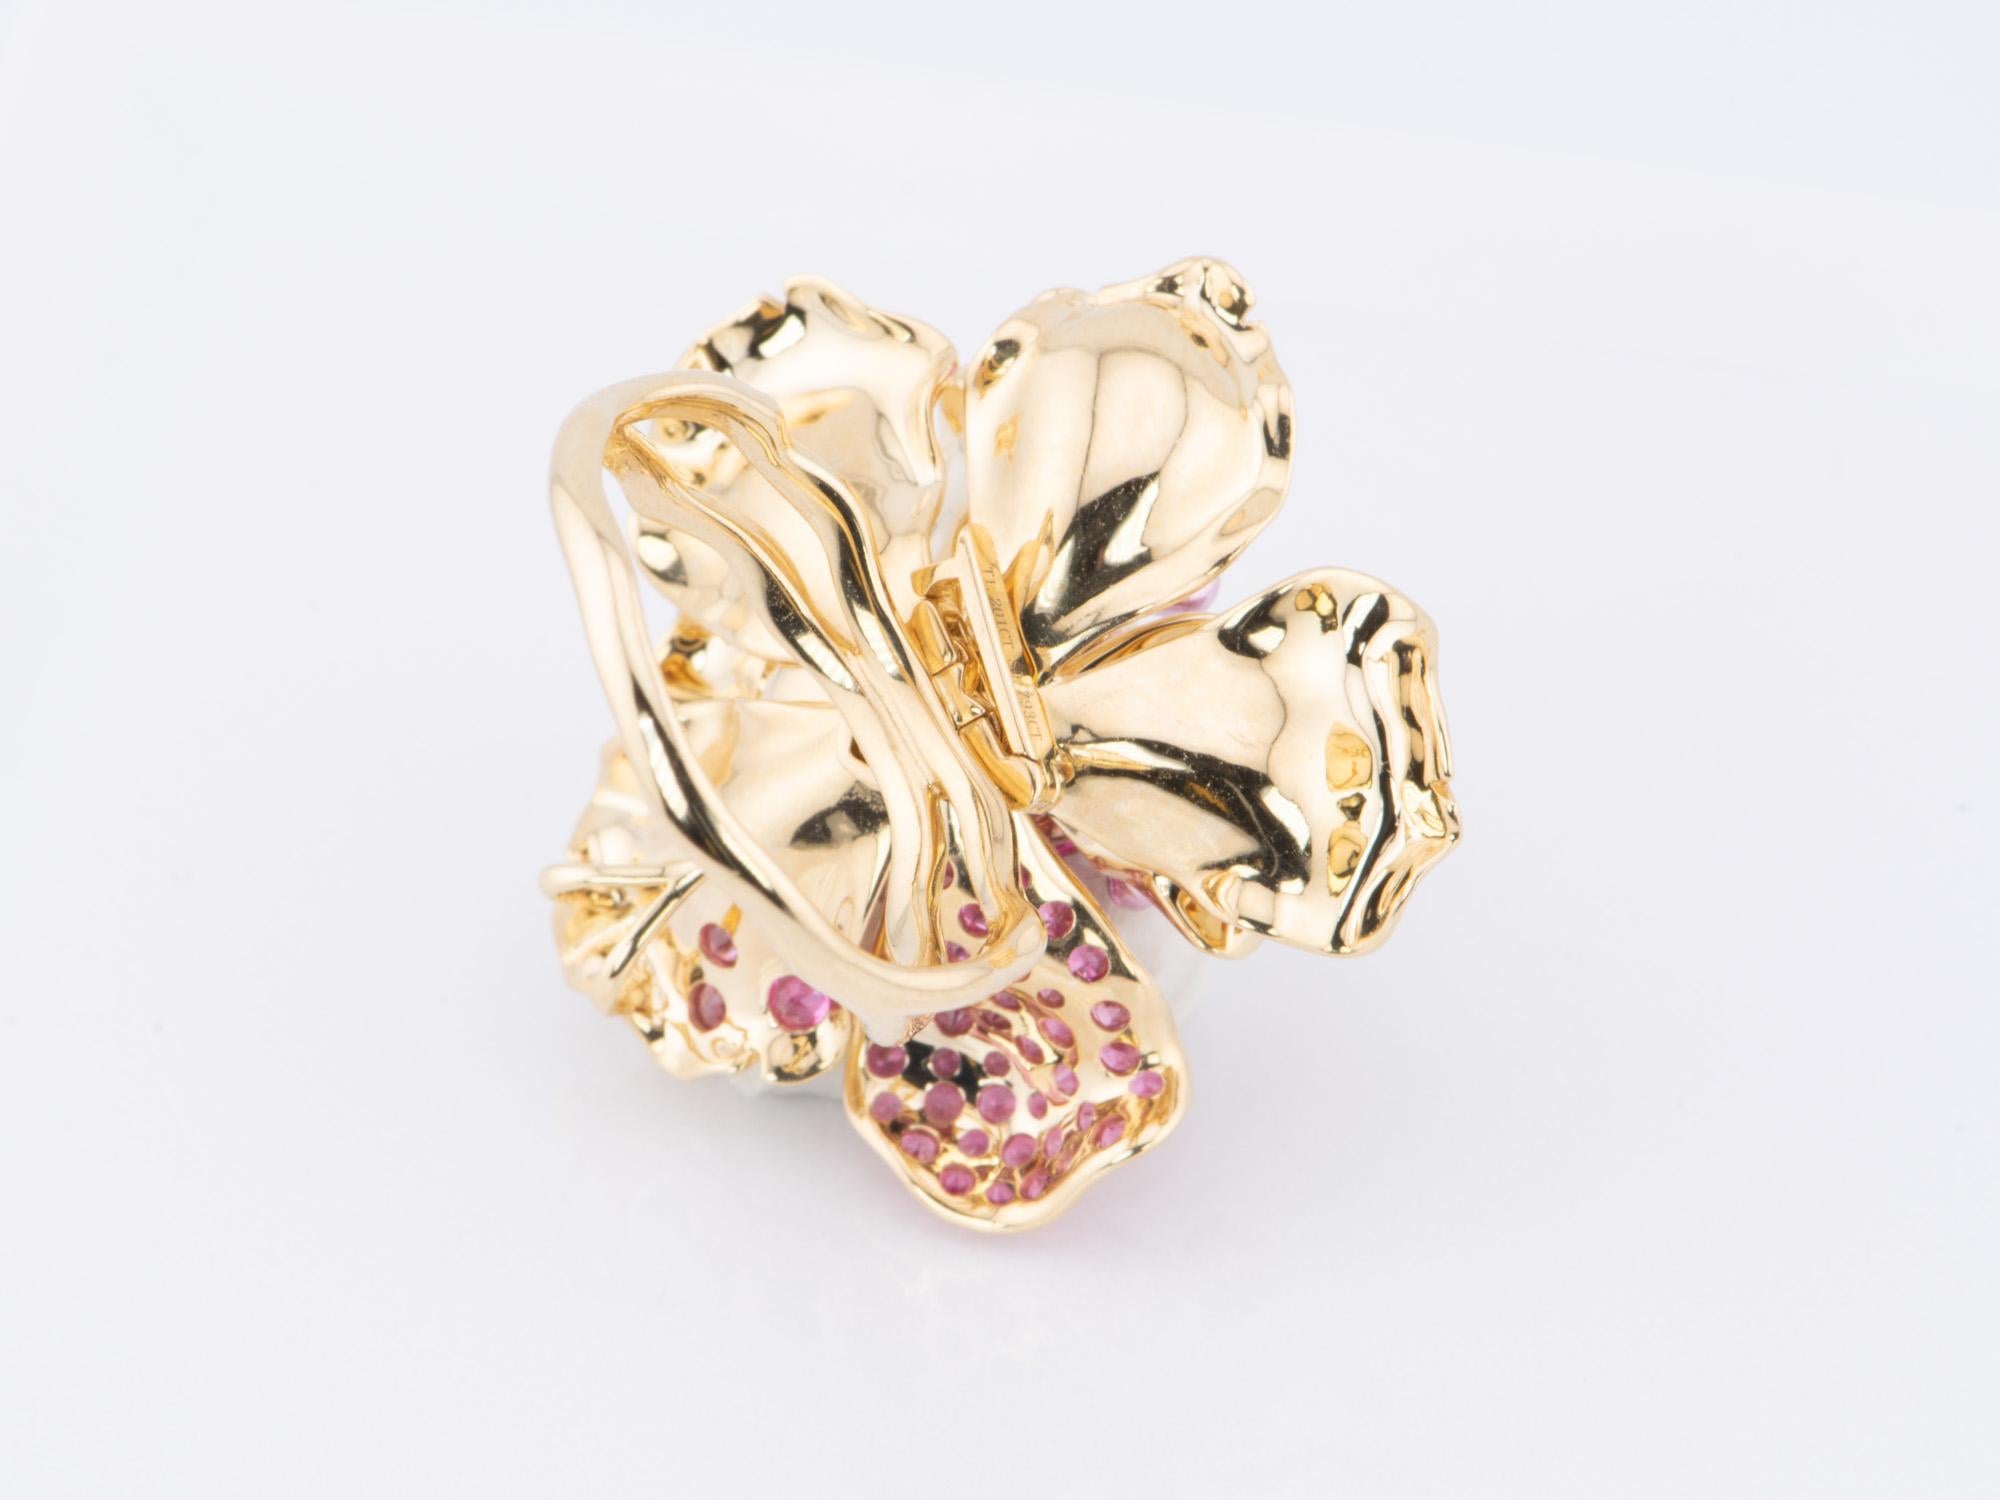 Art Jewelry Rubellite Tourmaline Center Flower Ring / Pendant 18K Gold R6641 For Sale 8